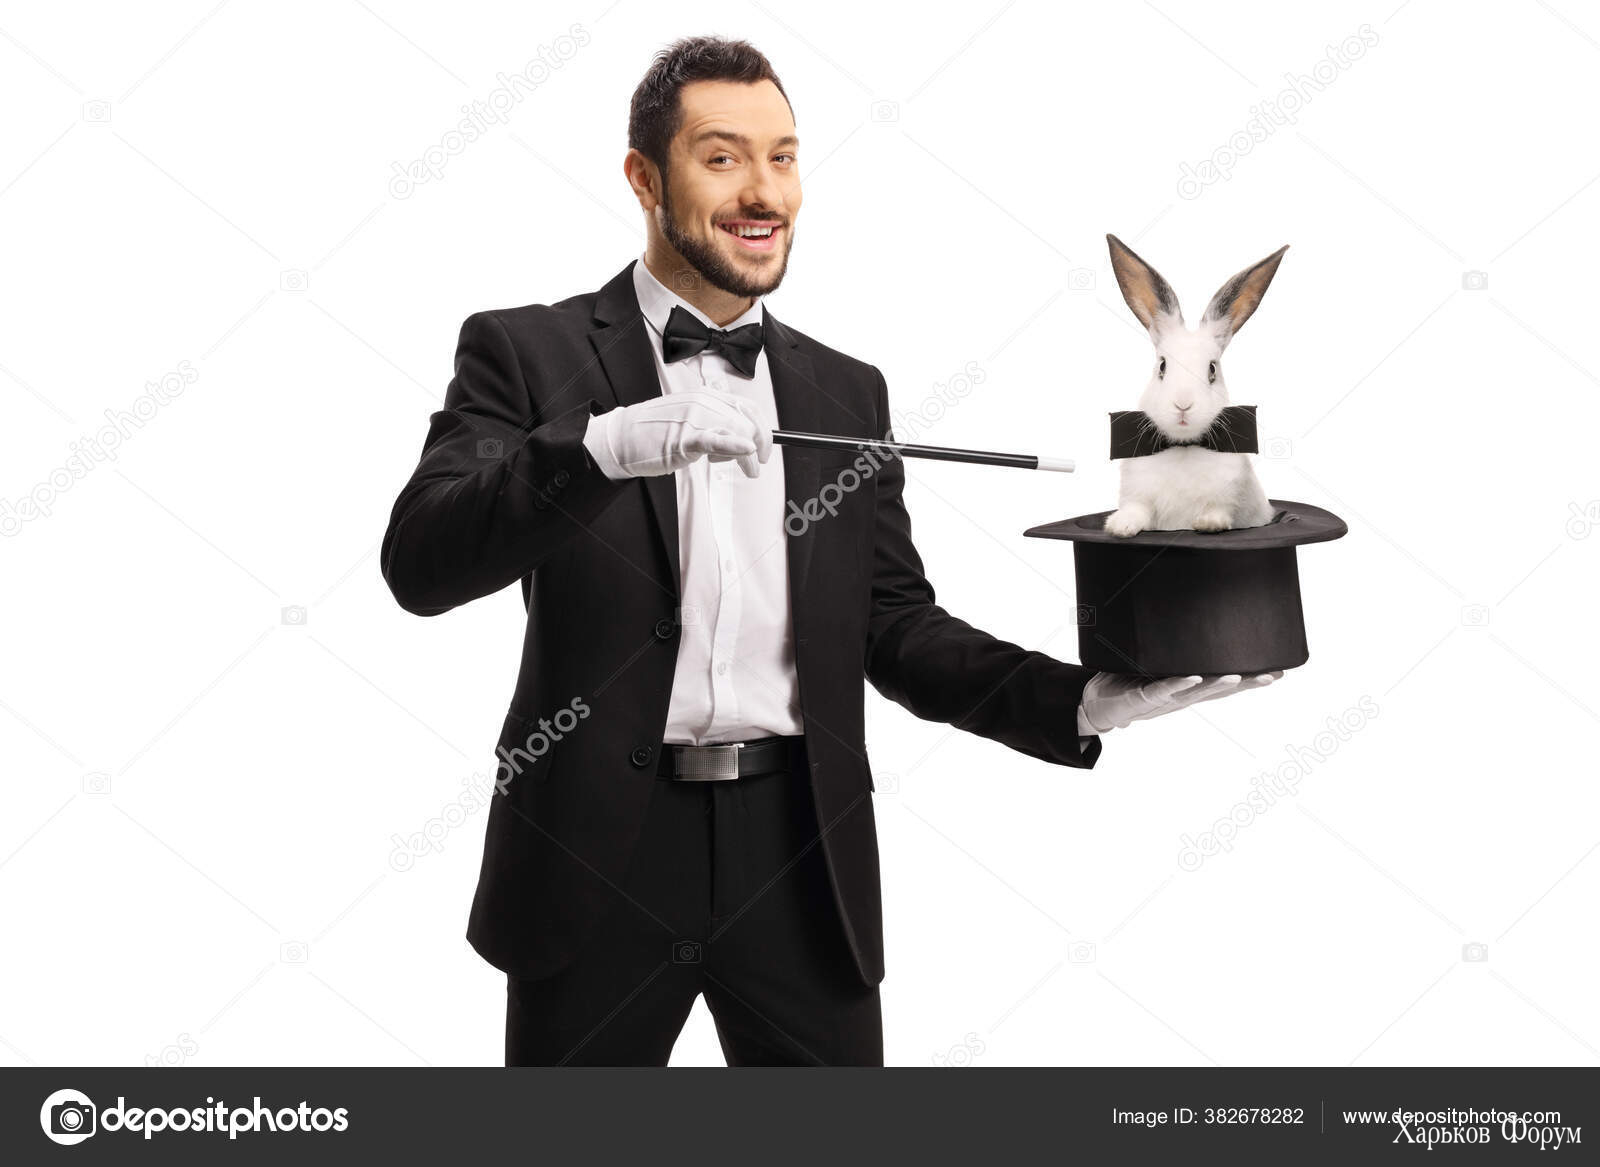 78282-stock-photo-magician-pulling-rabbit-hat-wand.jpg